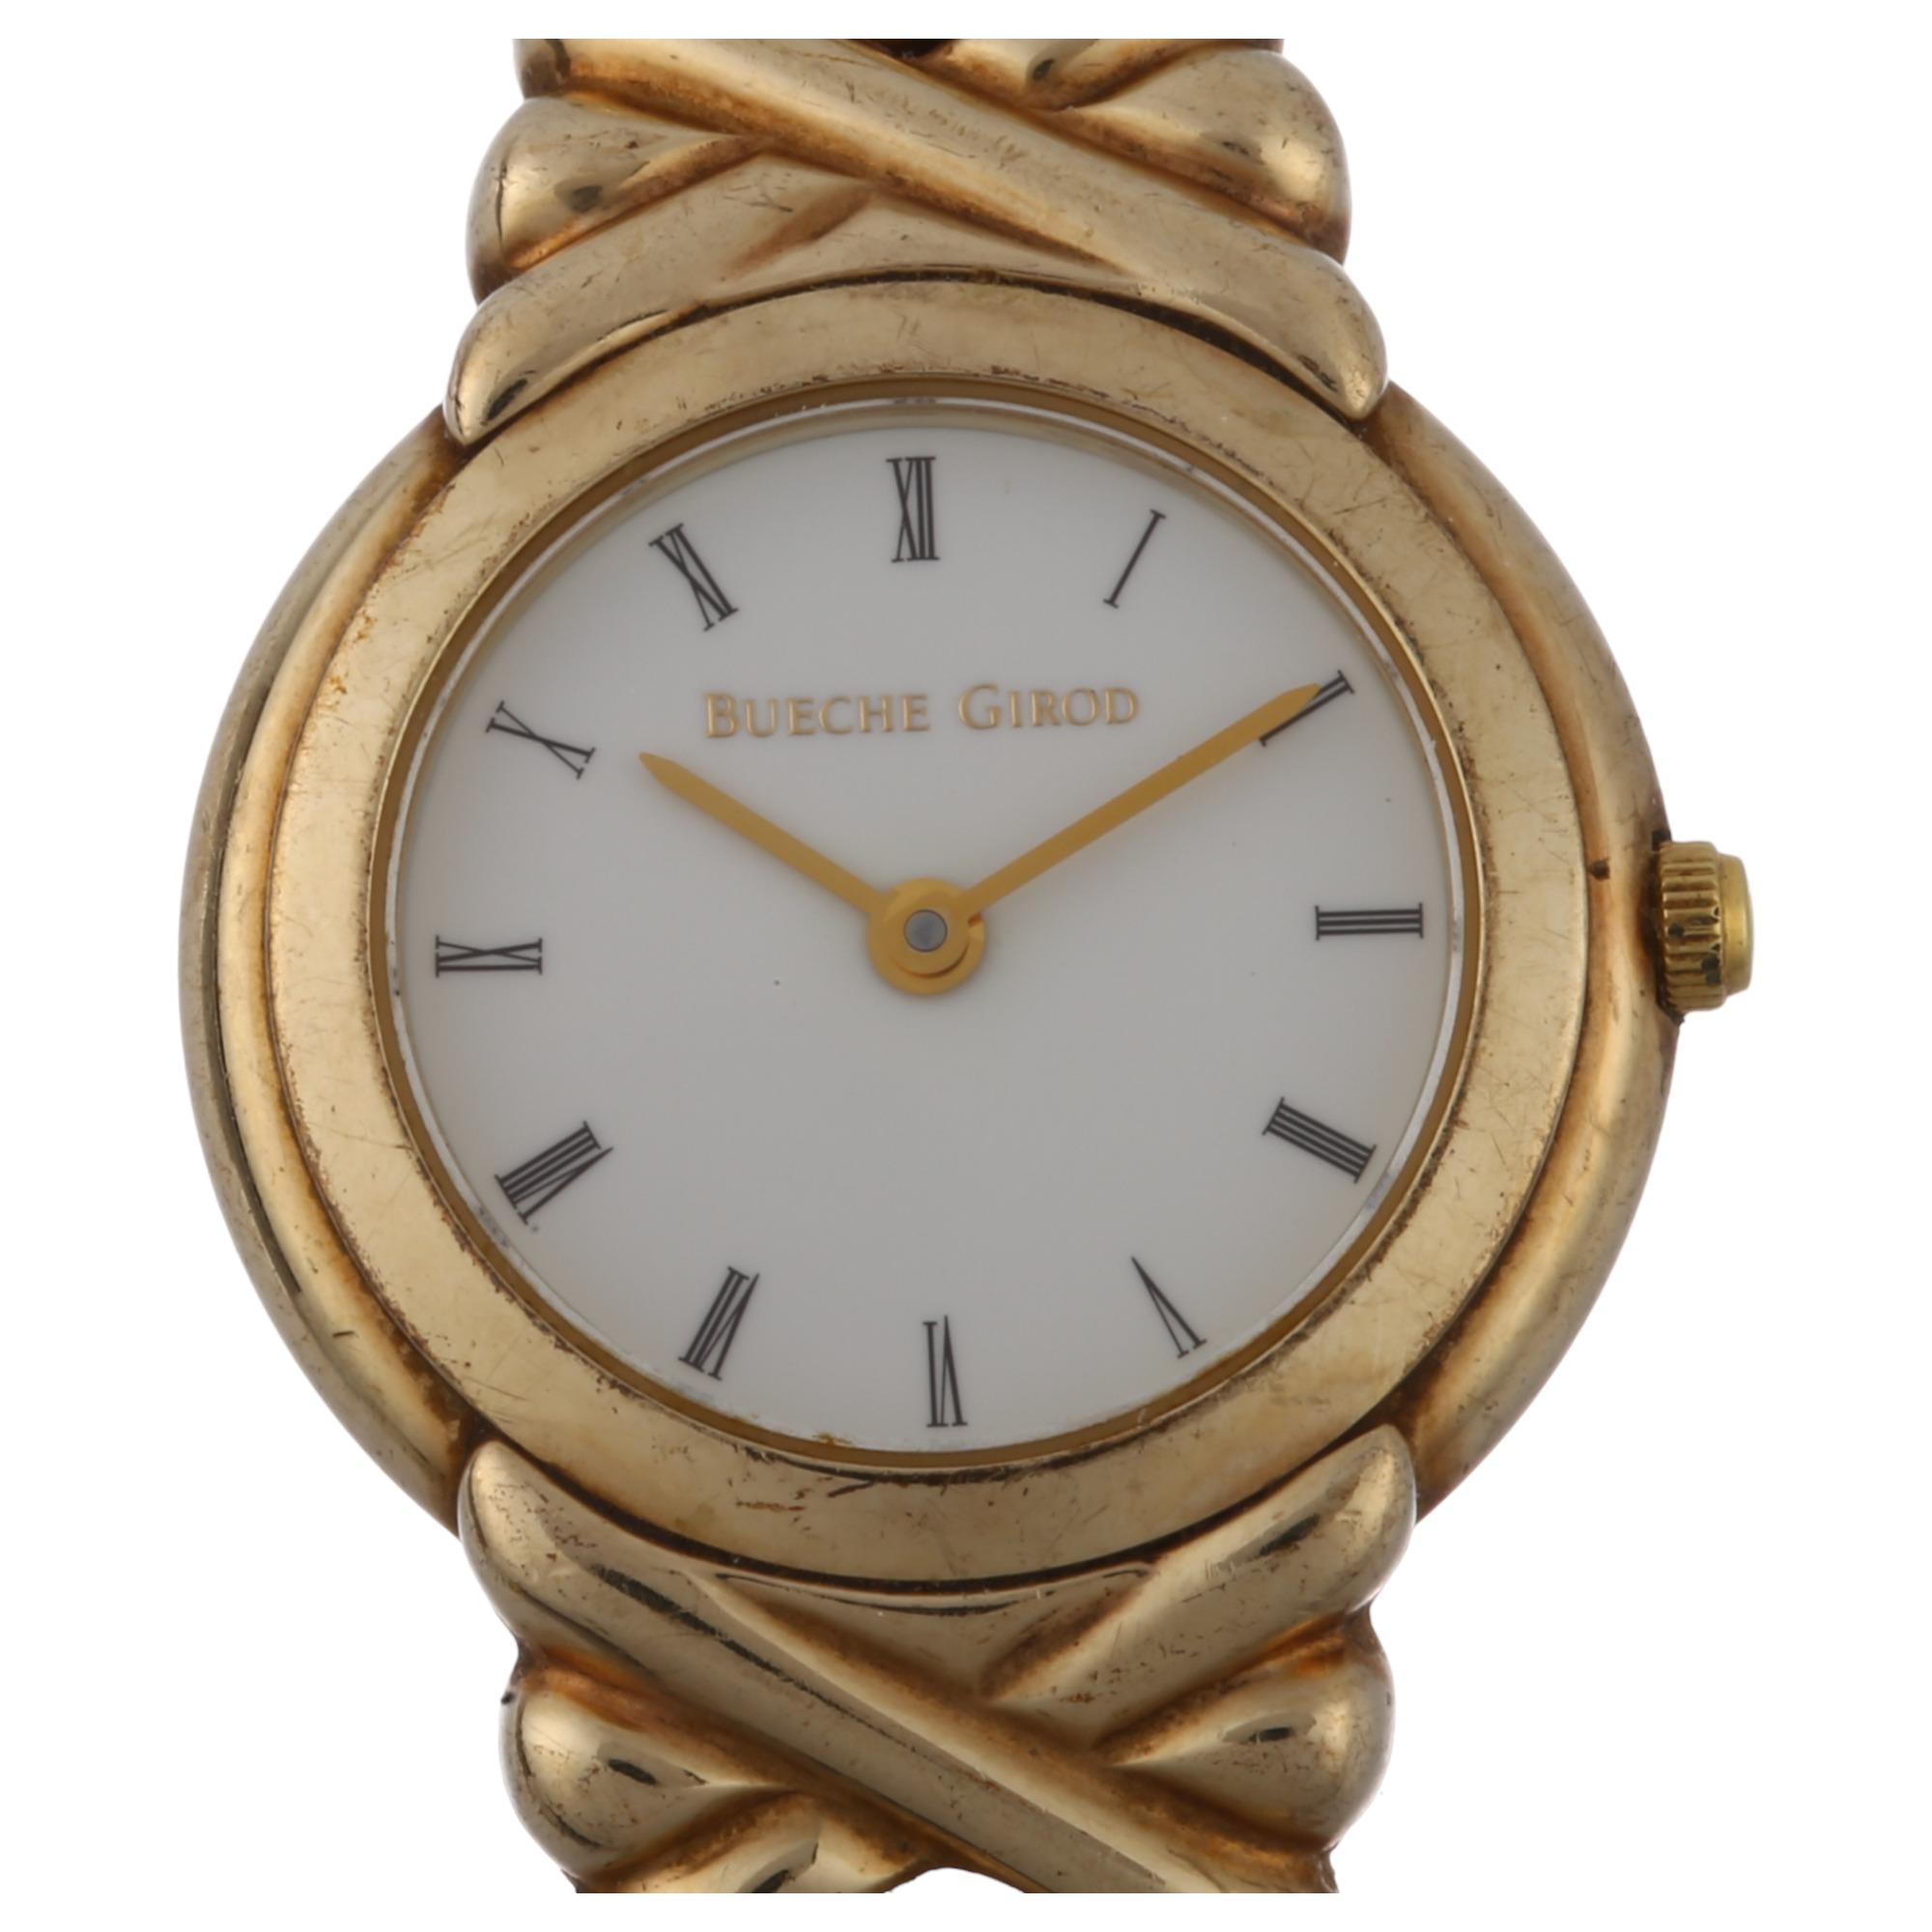 BUECHE GIROD - a lady's 9ct gold quartz bracelet watch, ref. 6006, white dial with Roman numeral